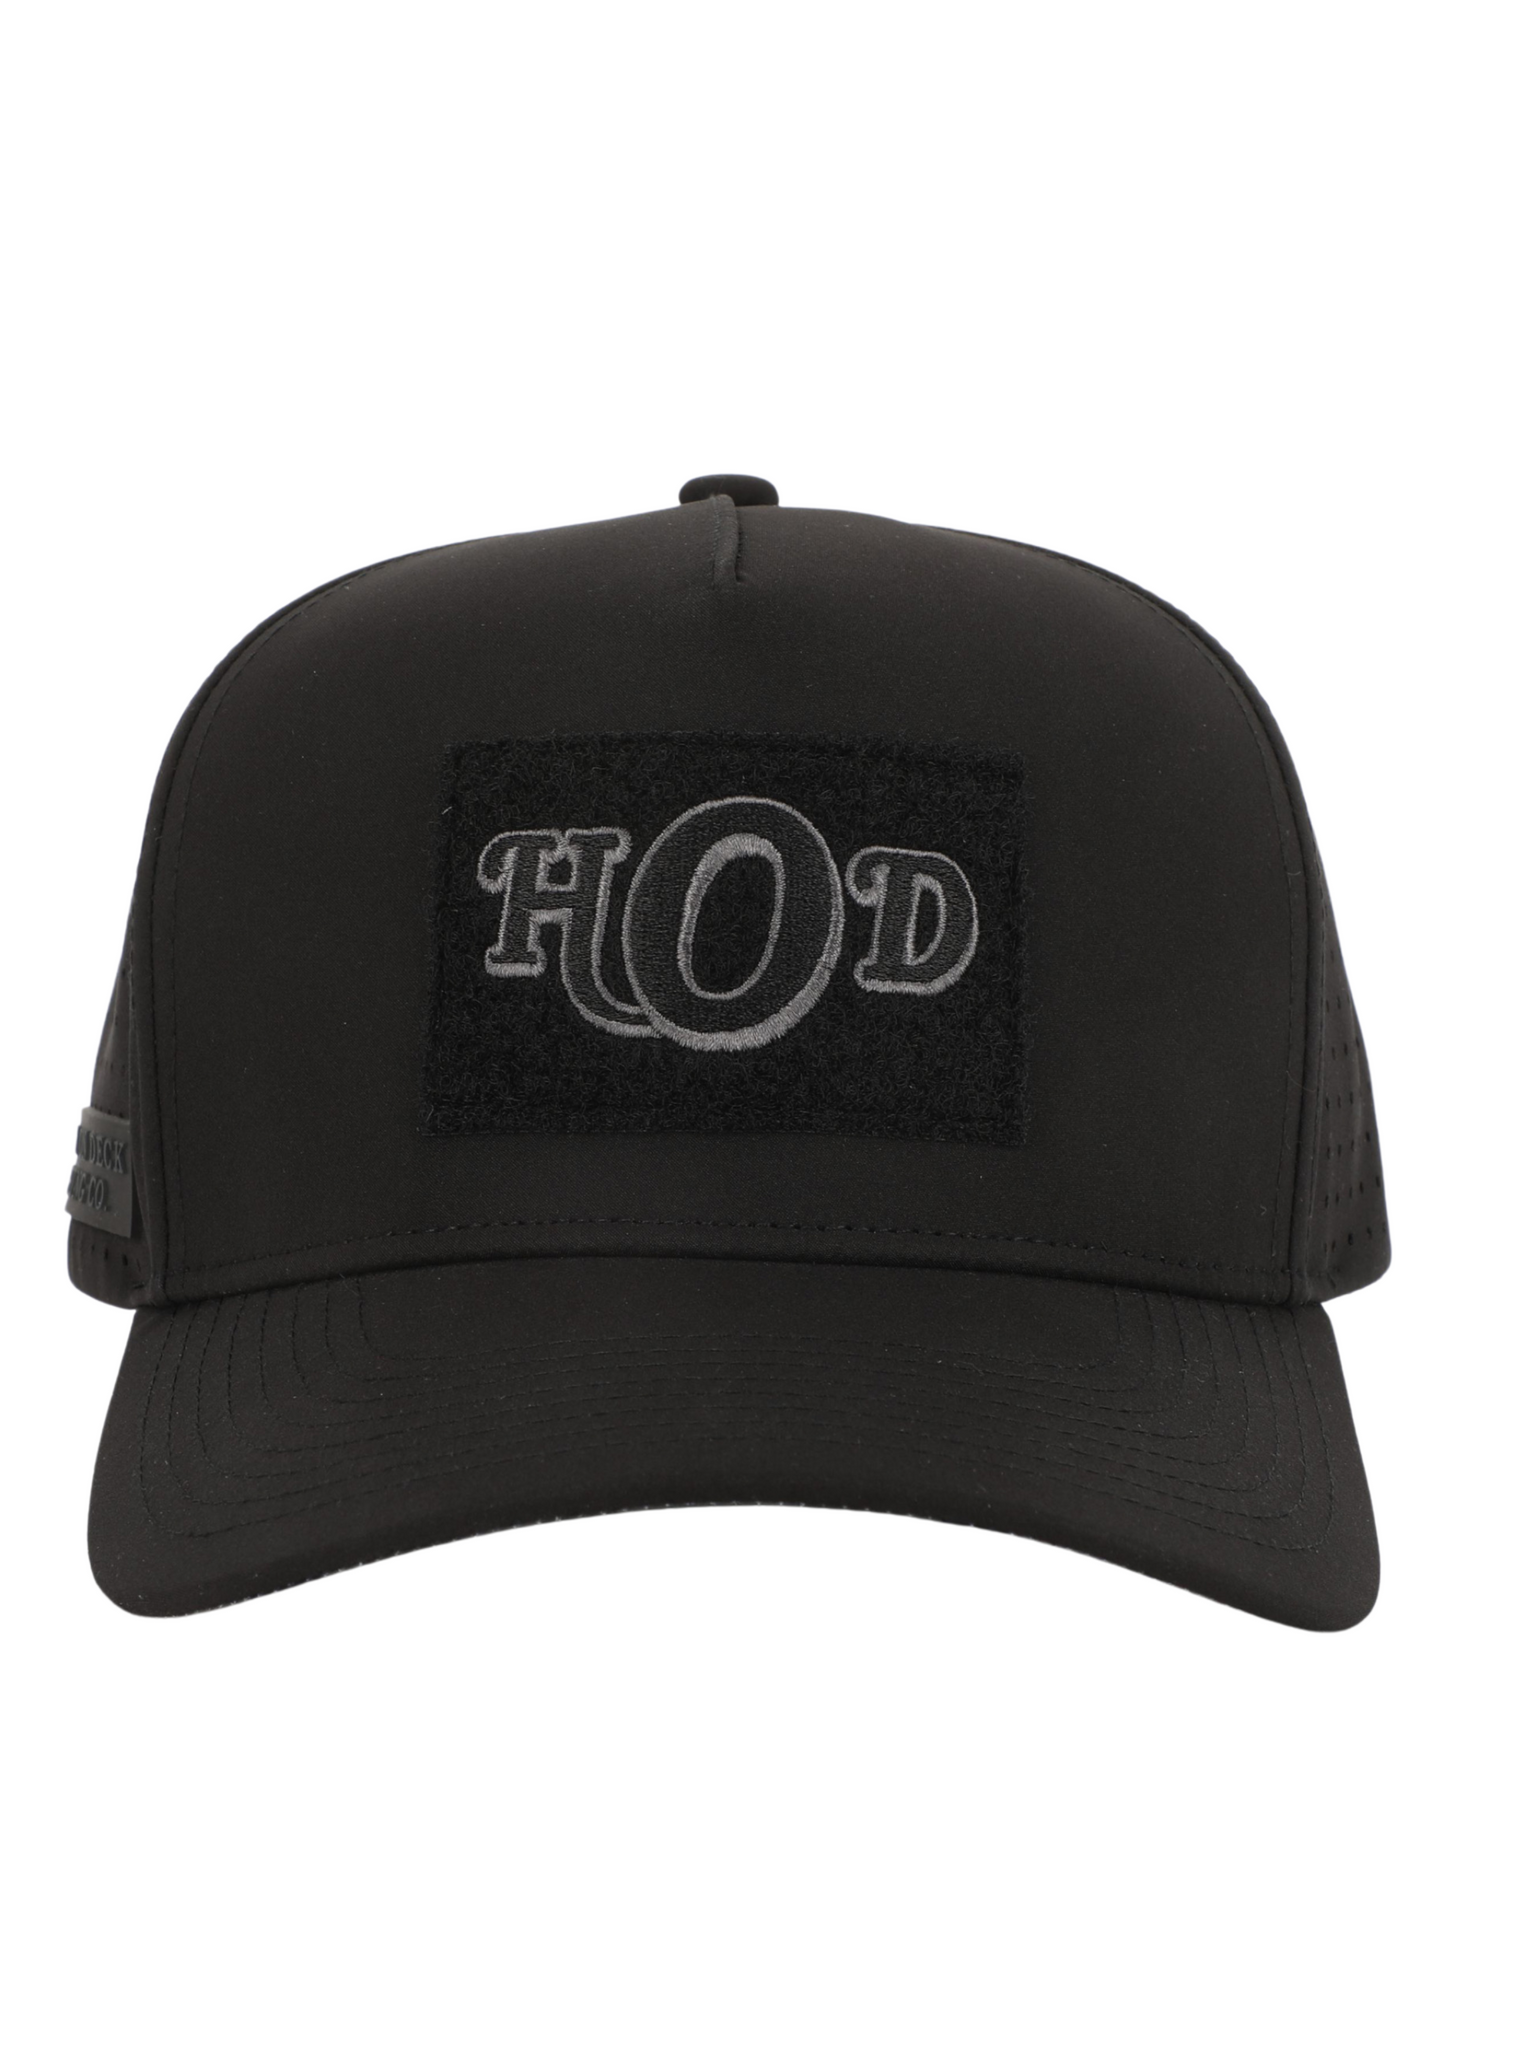 H2OD 5-Panel Snapback (Black Camo)